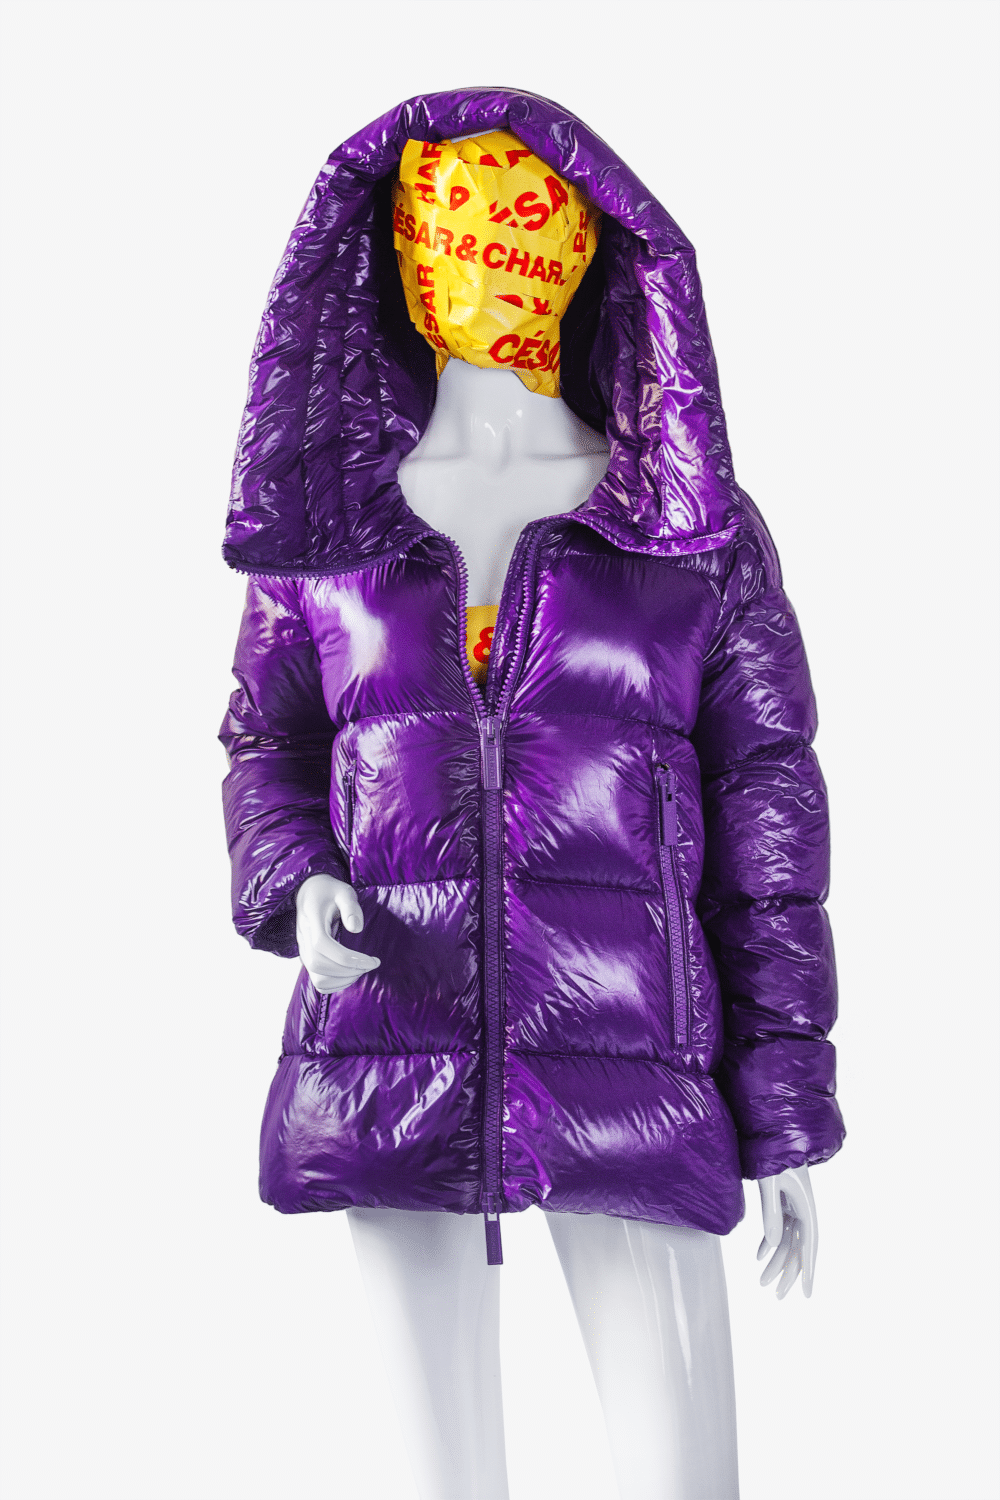 purple puffer jacket